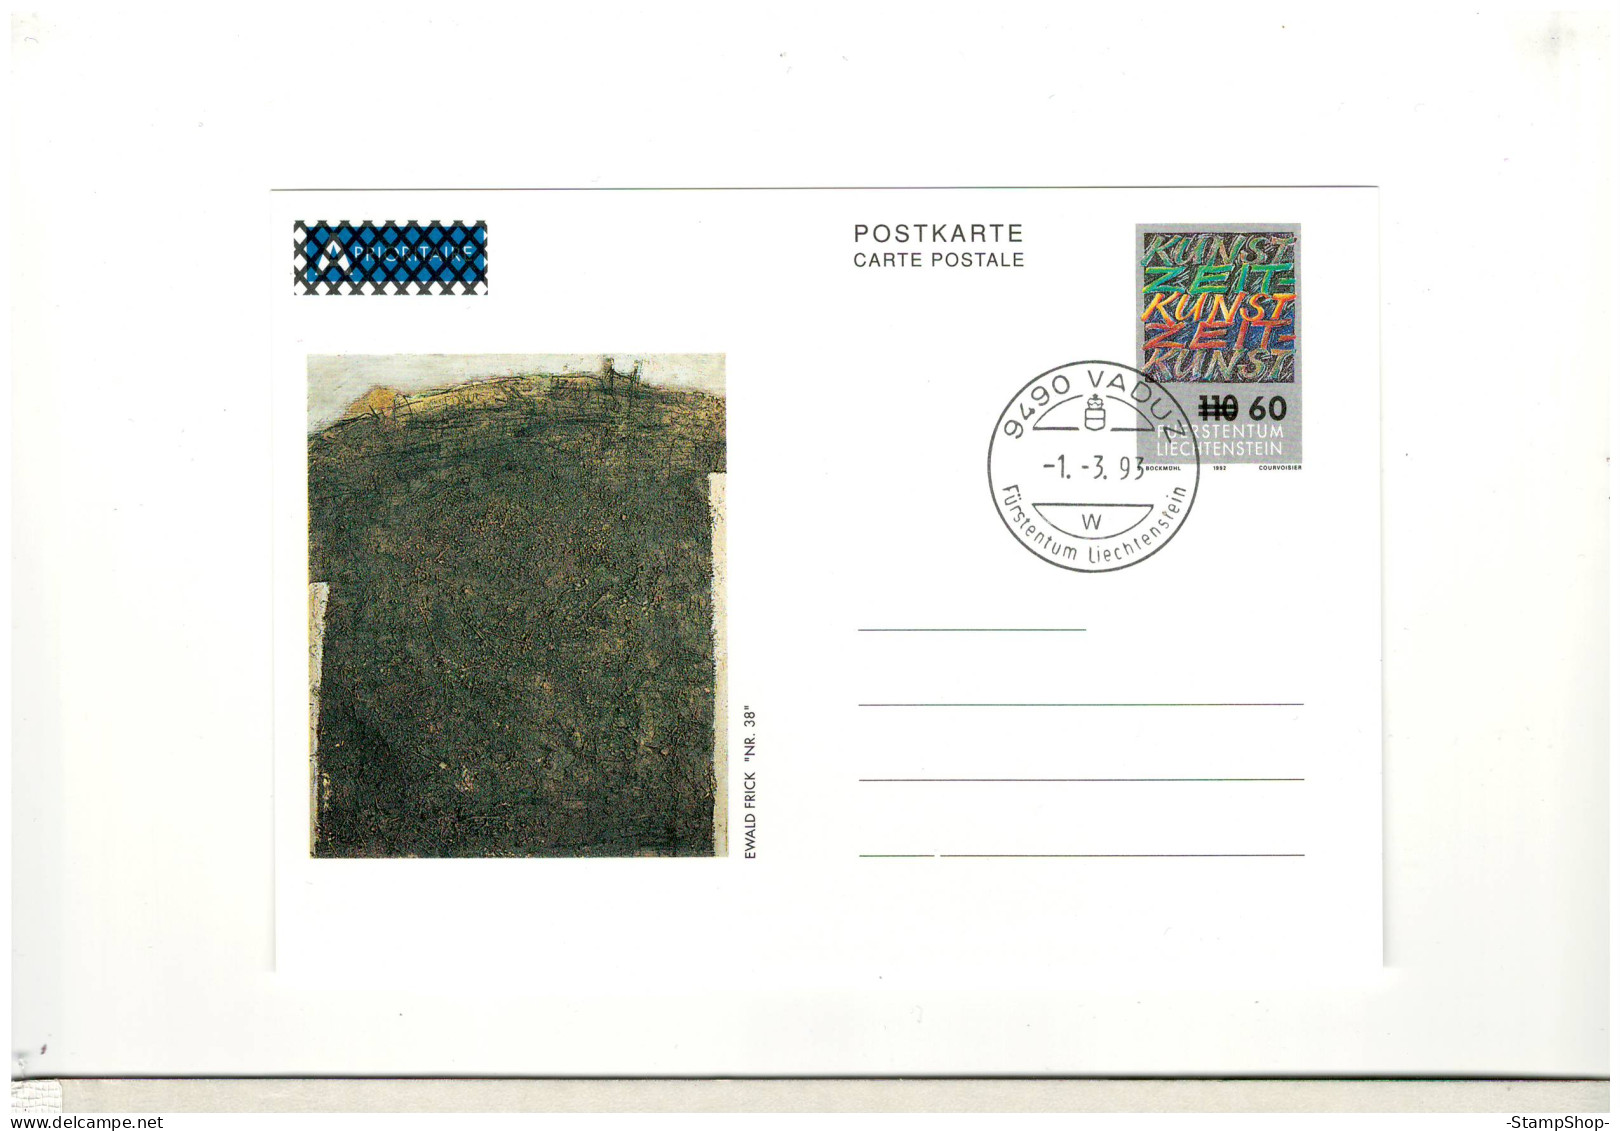 1993 Liechtenstein - Vaduz Postmark, Art, Overprint With Lower Value - Postcard - BX2043 - Storia Postale